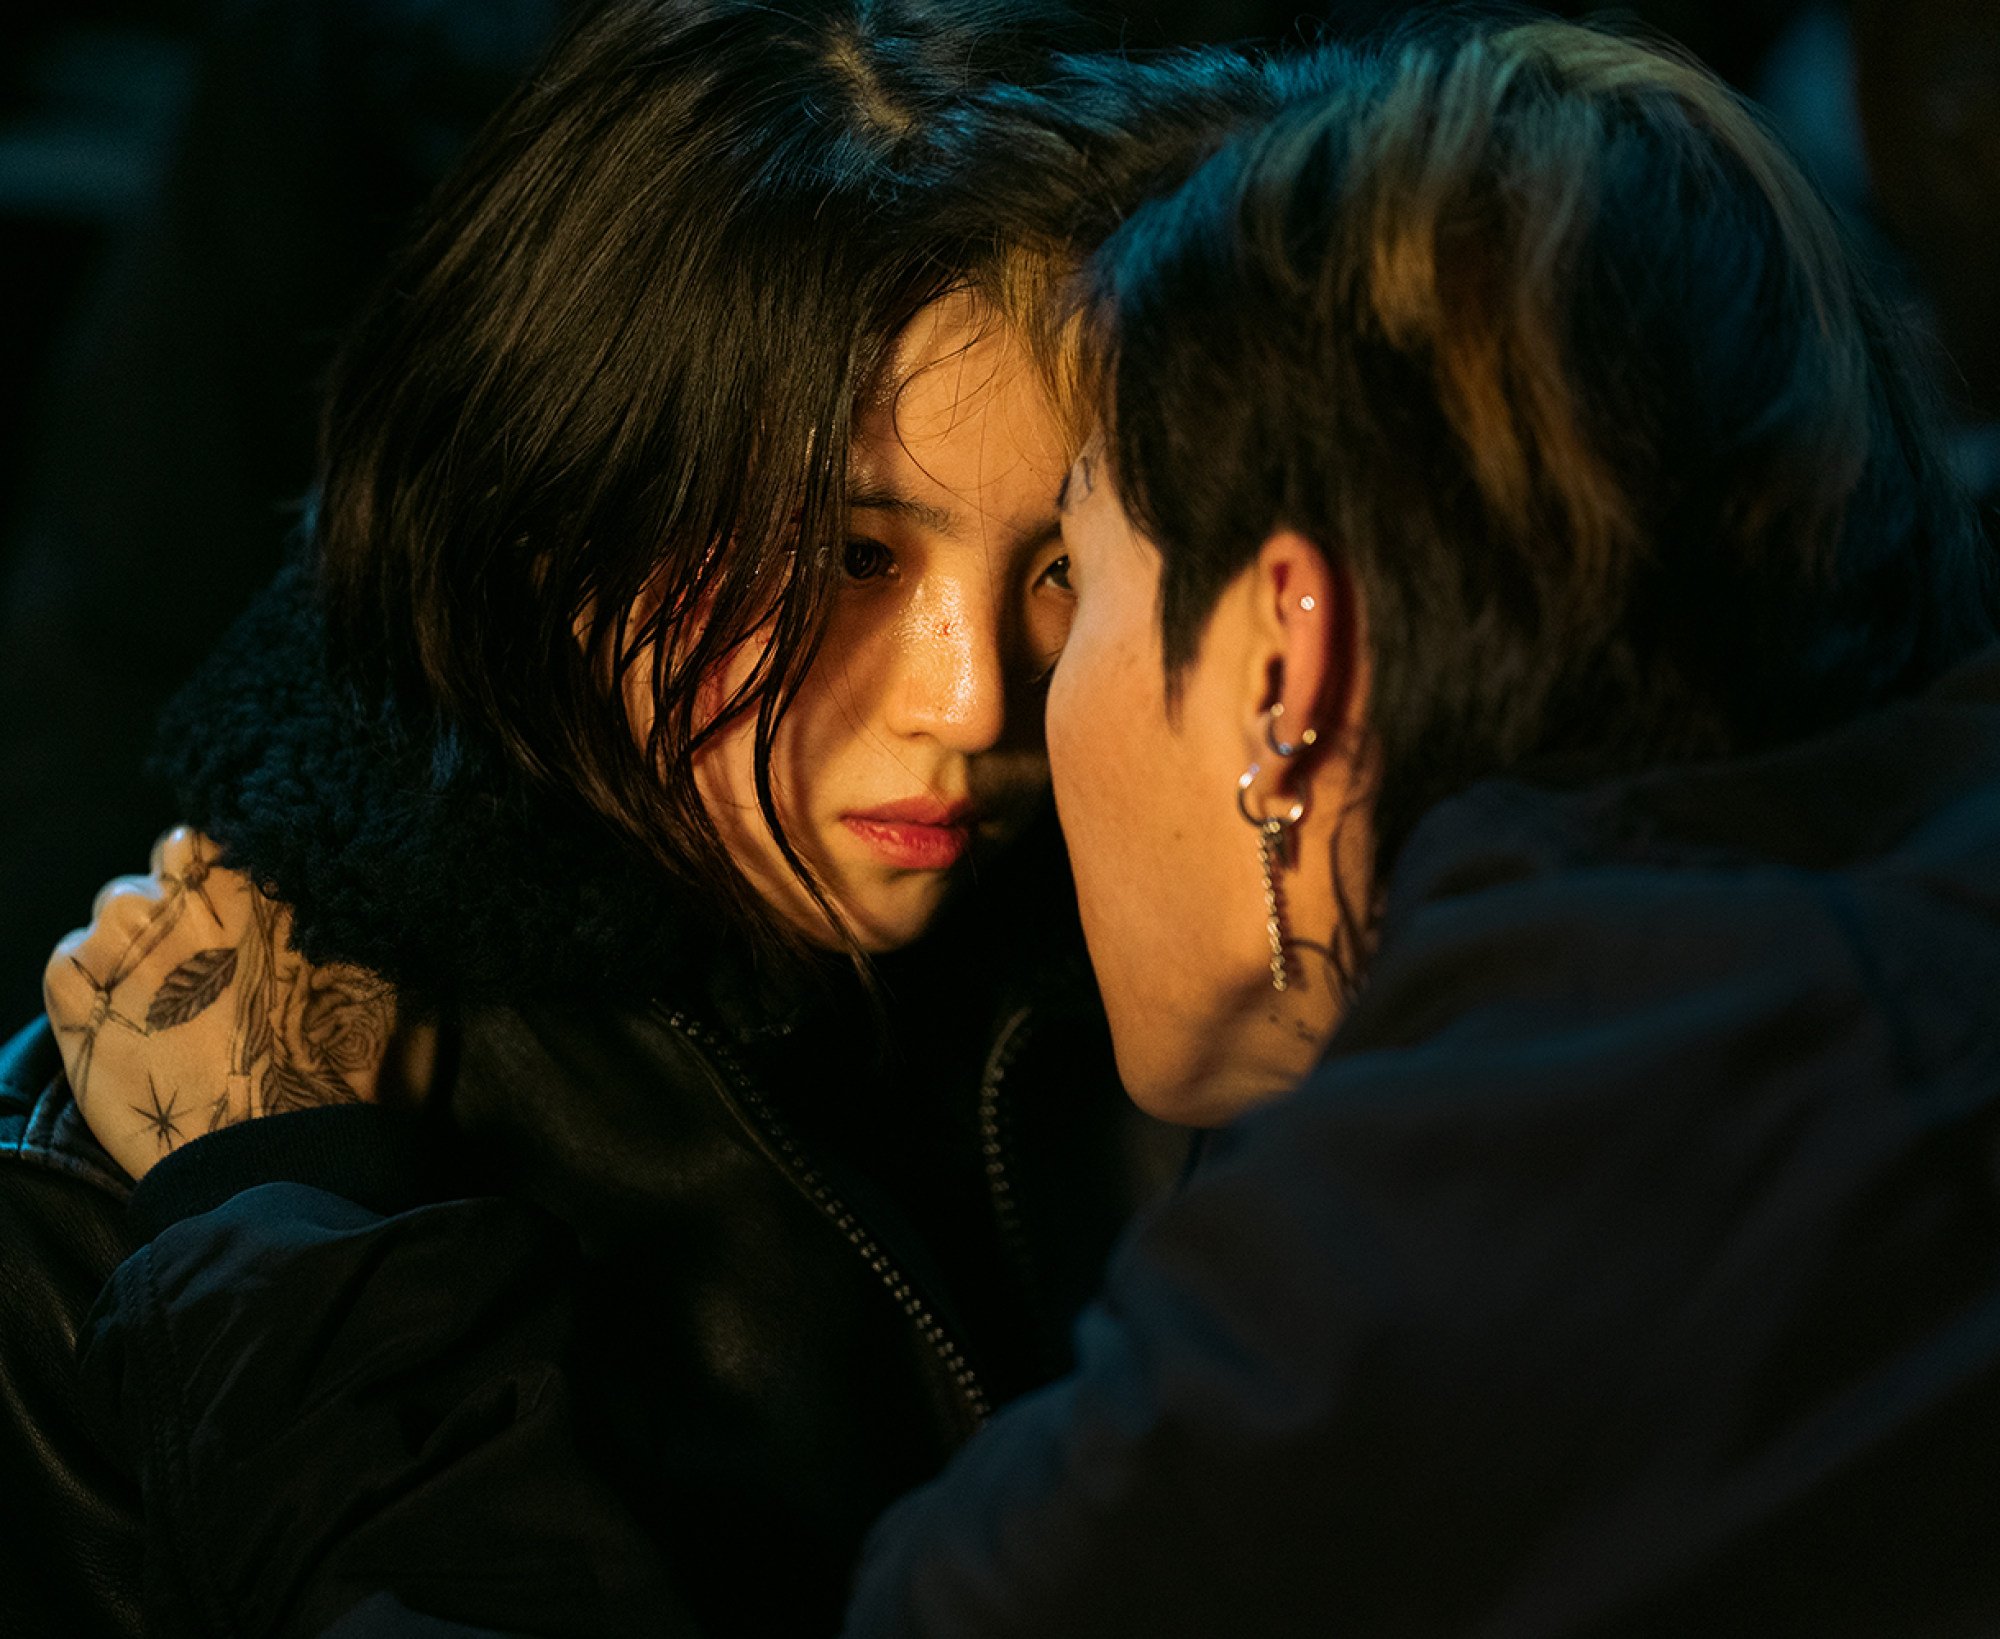 K-drama review: Hometown Cha-Cha-Cha – Netflix's charming romcom